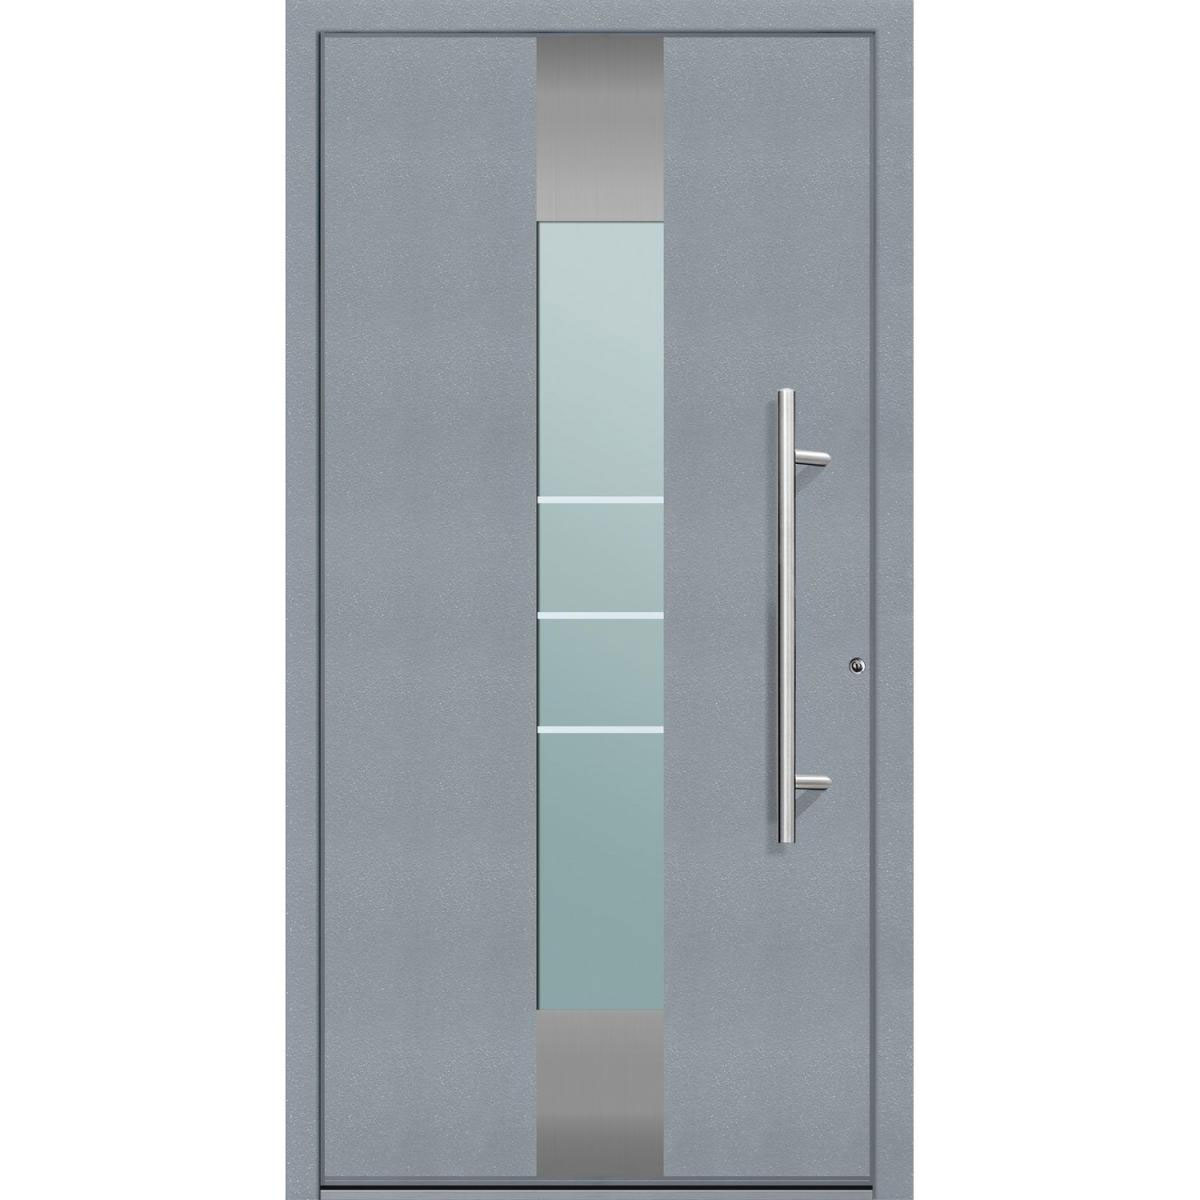 Aluminium Sicherheits-Haustür „Catania Superior“, 60mm, grau, 100x210 cm, Anschlag rechts, inkl. Griffset